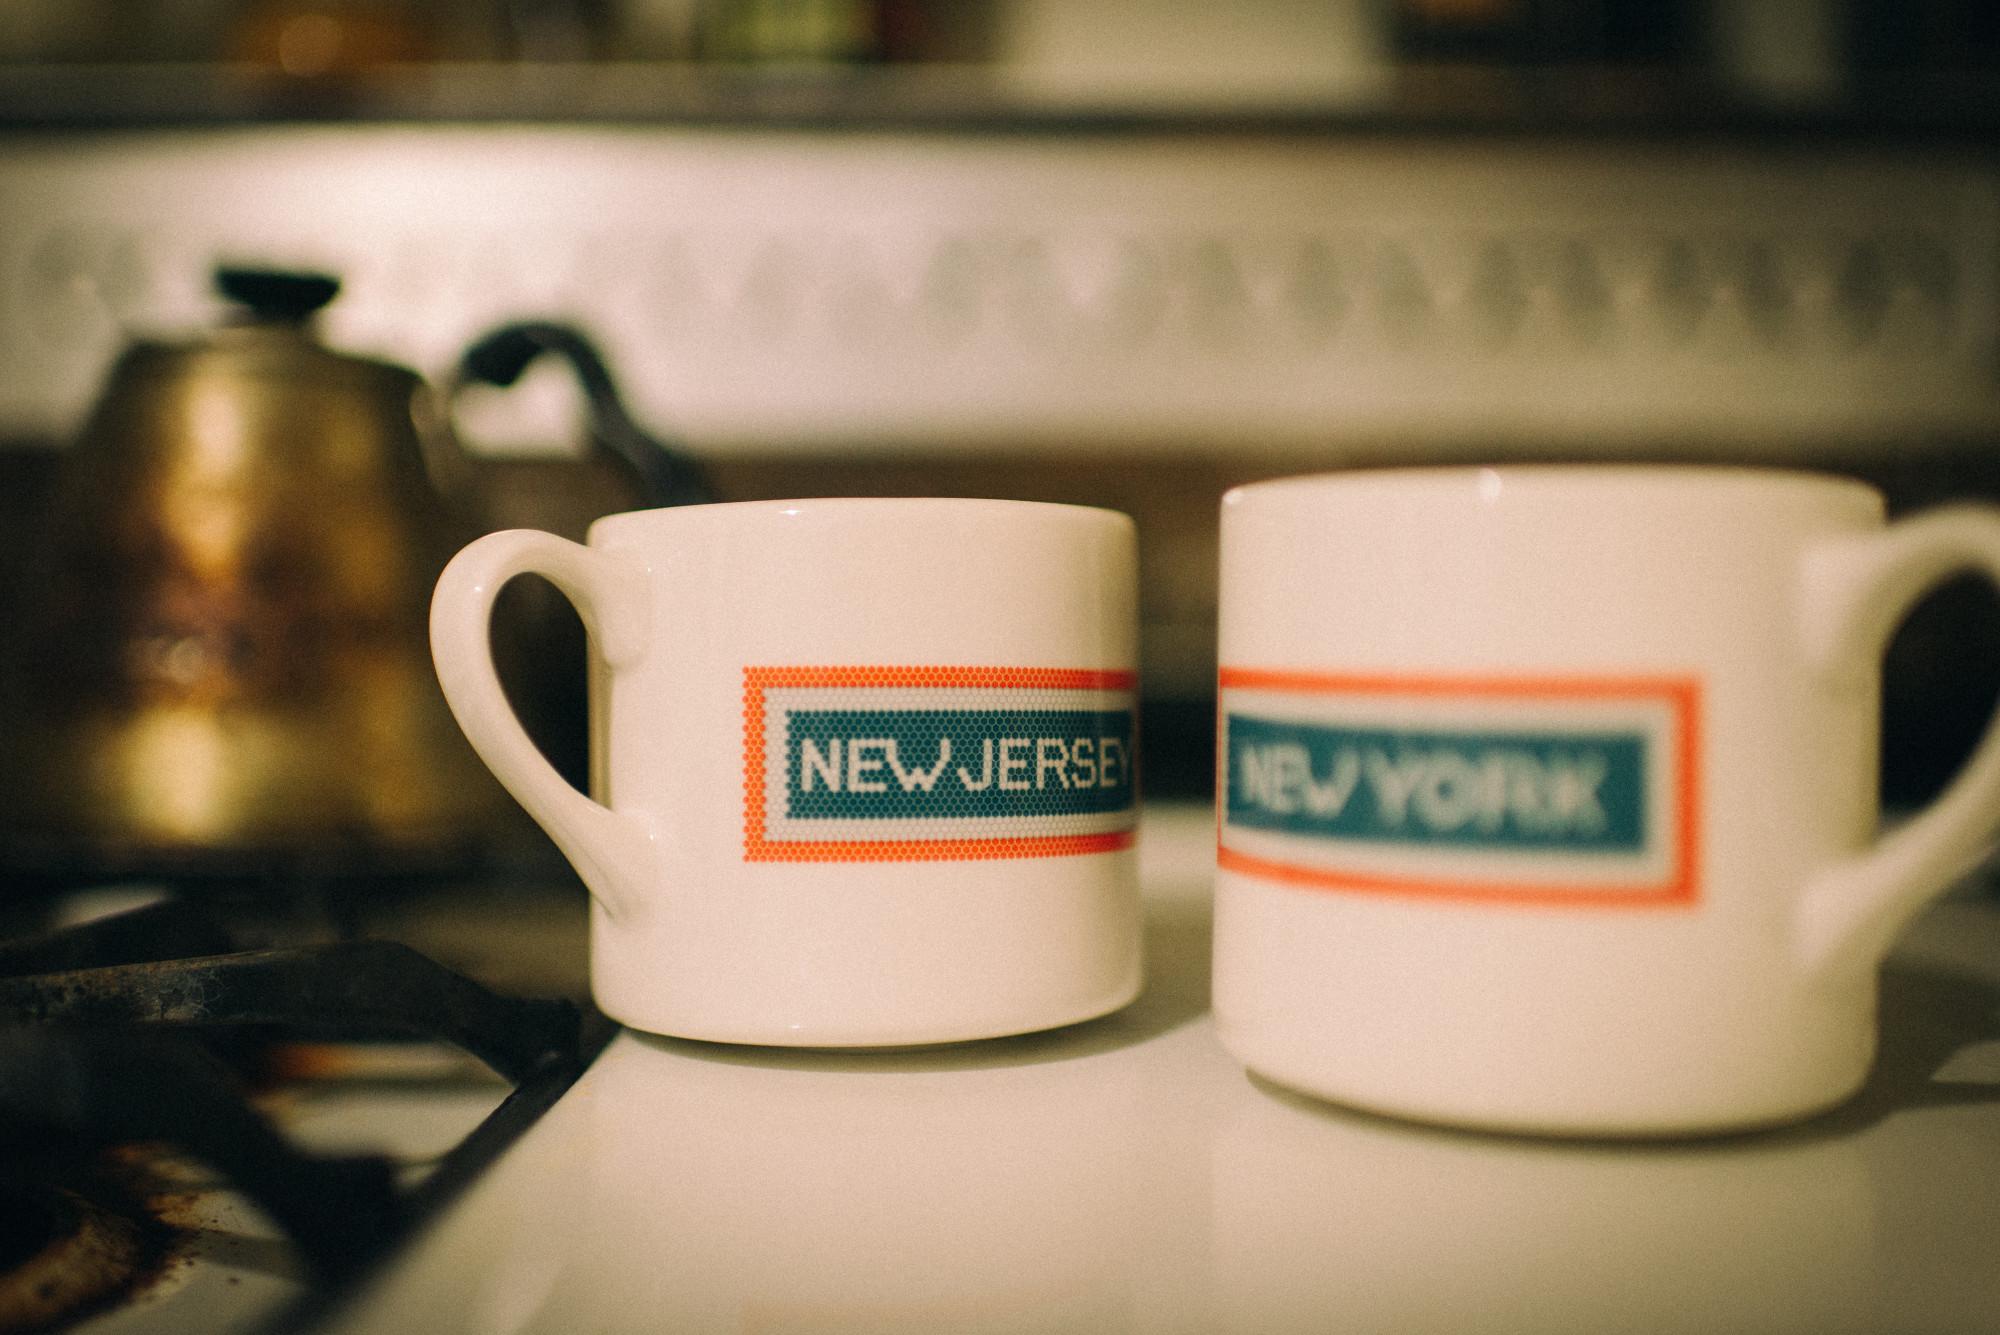 New Jersey and New York coffee mugs